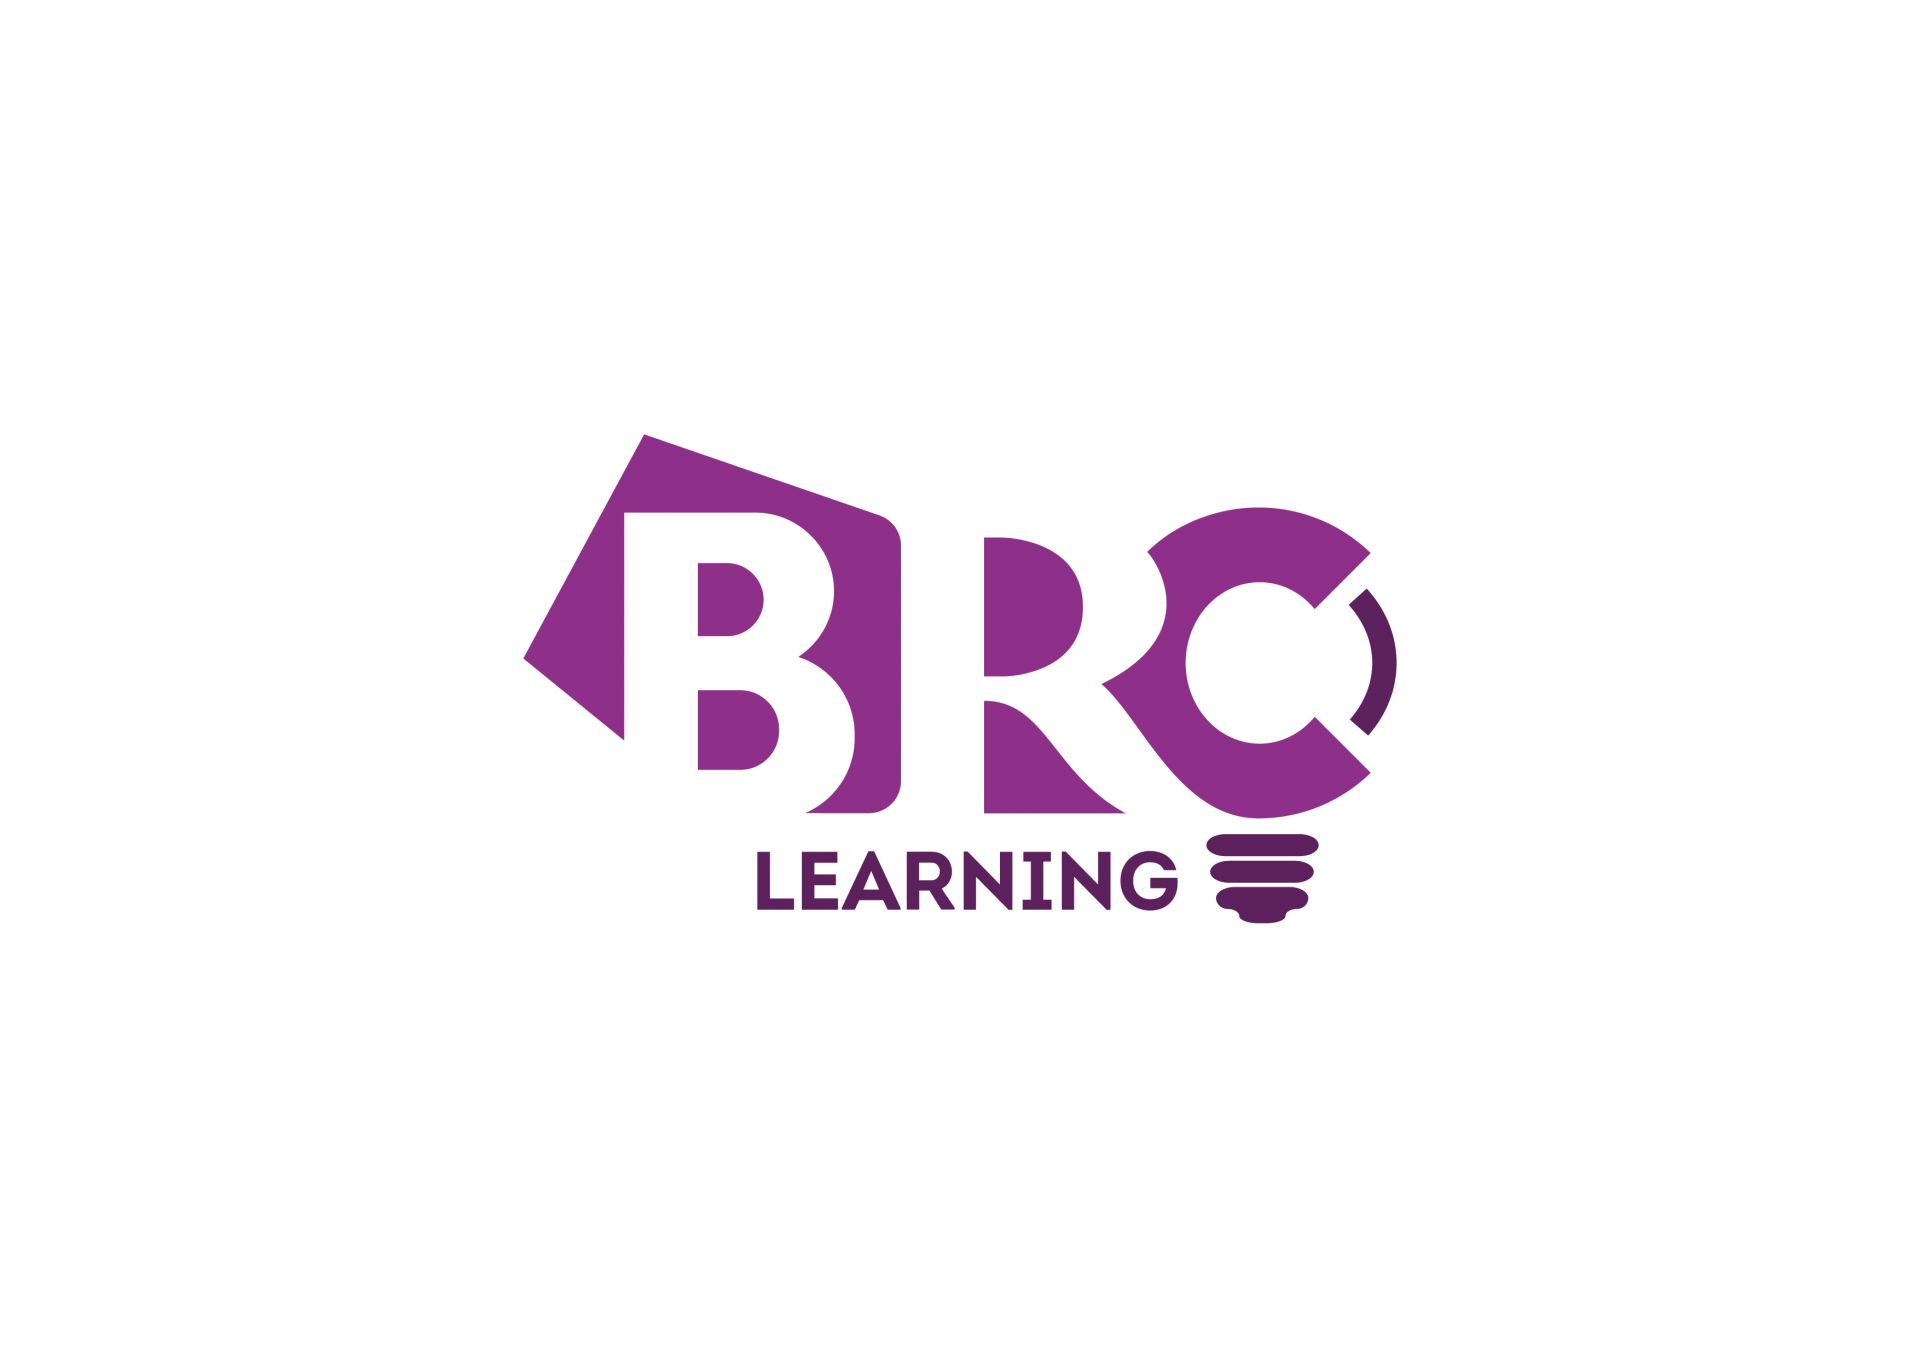 Professional brc logo Vectors & Illustrations for Free Download | Freepik